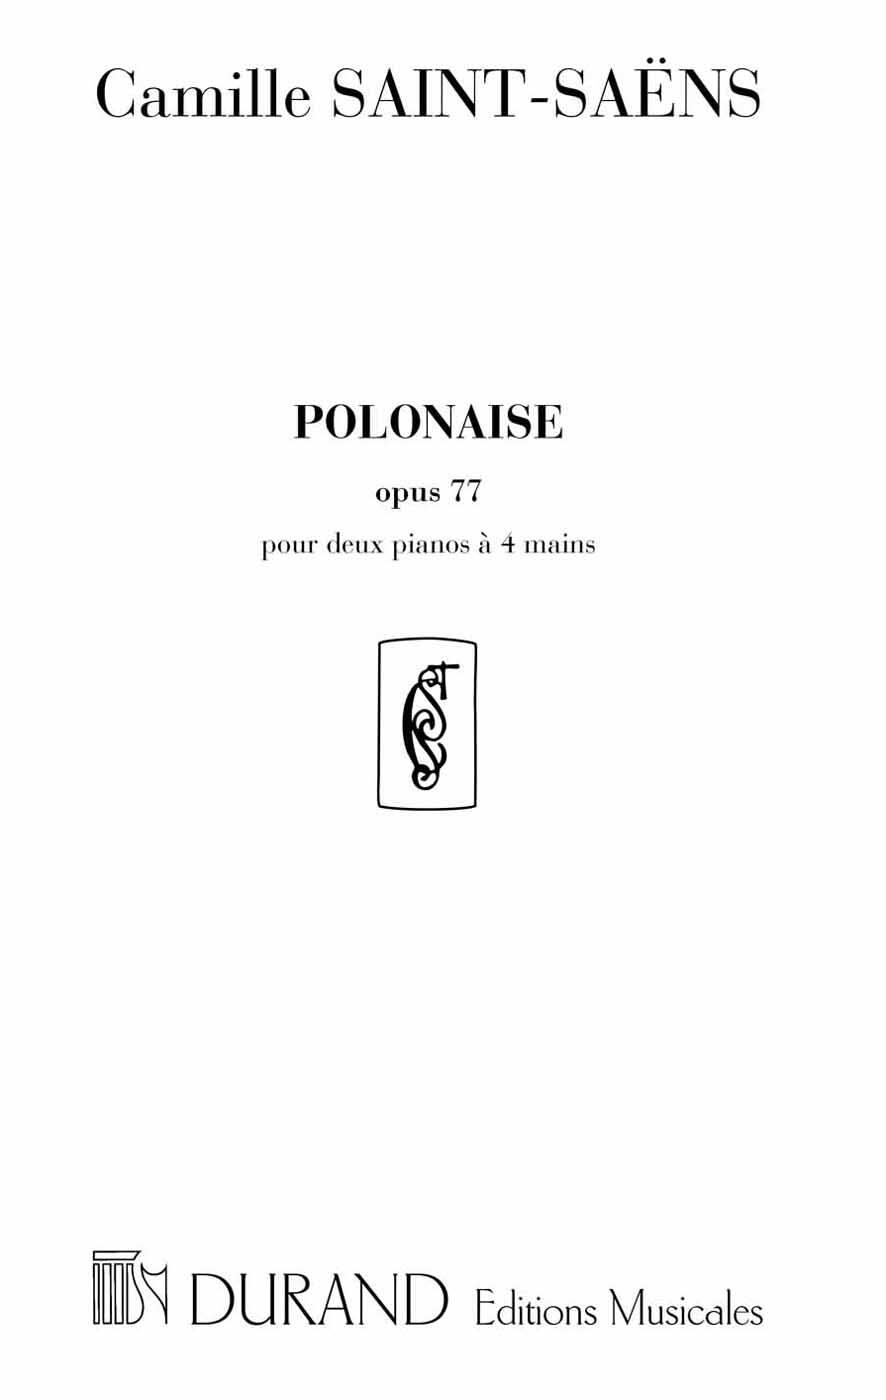 Polonaise Op 77 : photo 1